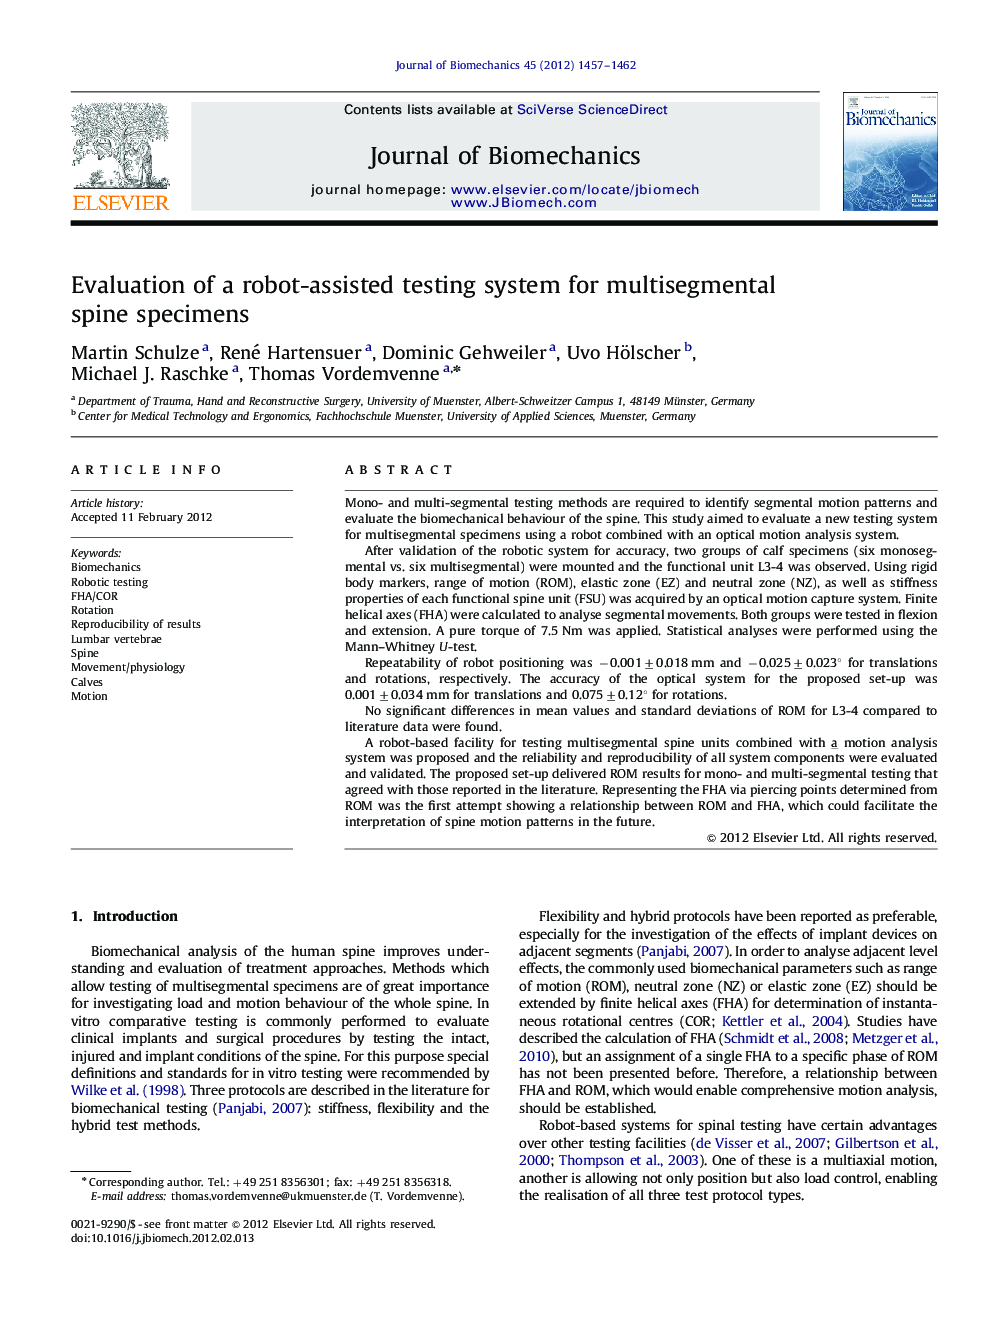 Evaluation of a robot-assisted testing system for multisegmental spine specimens